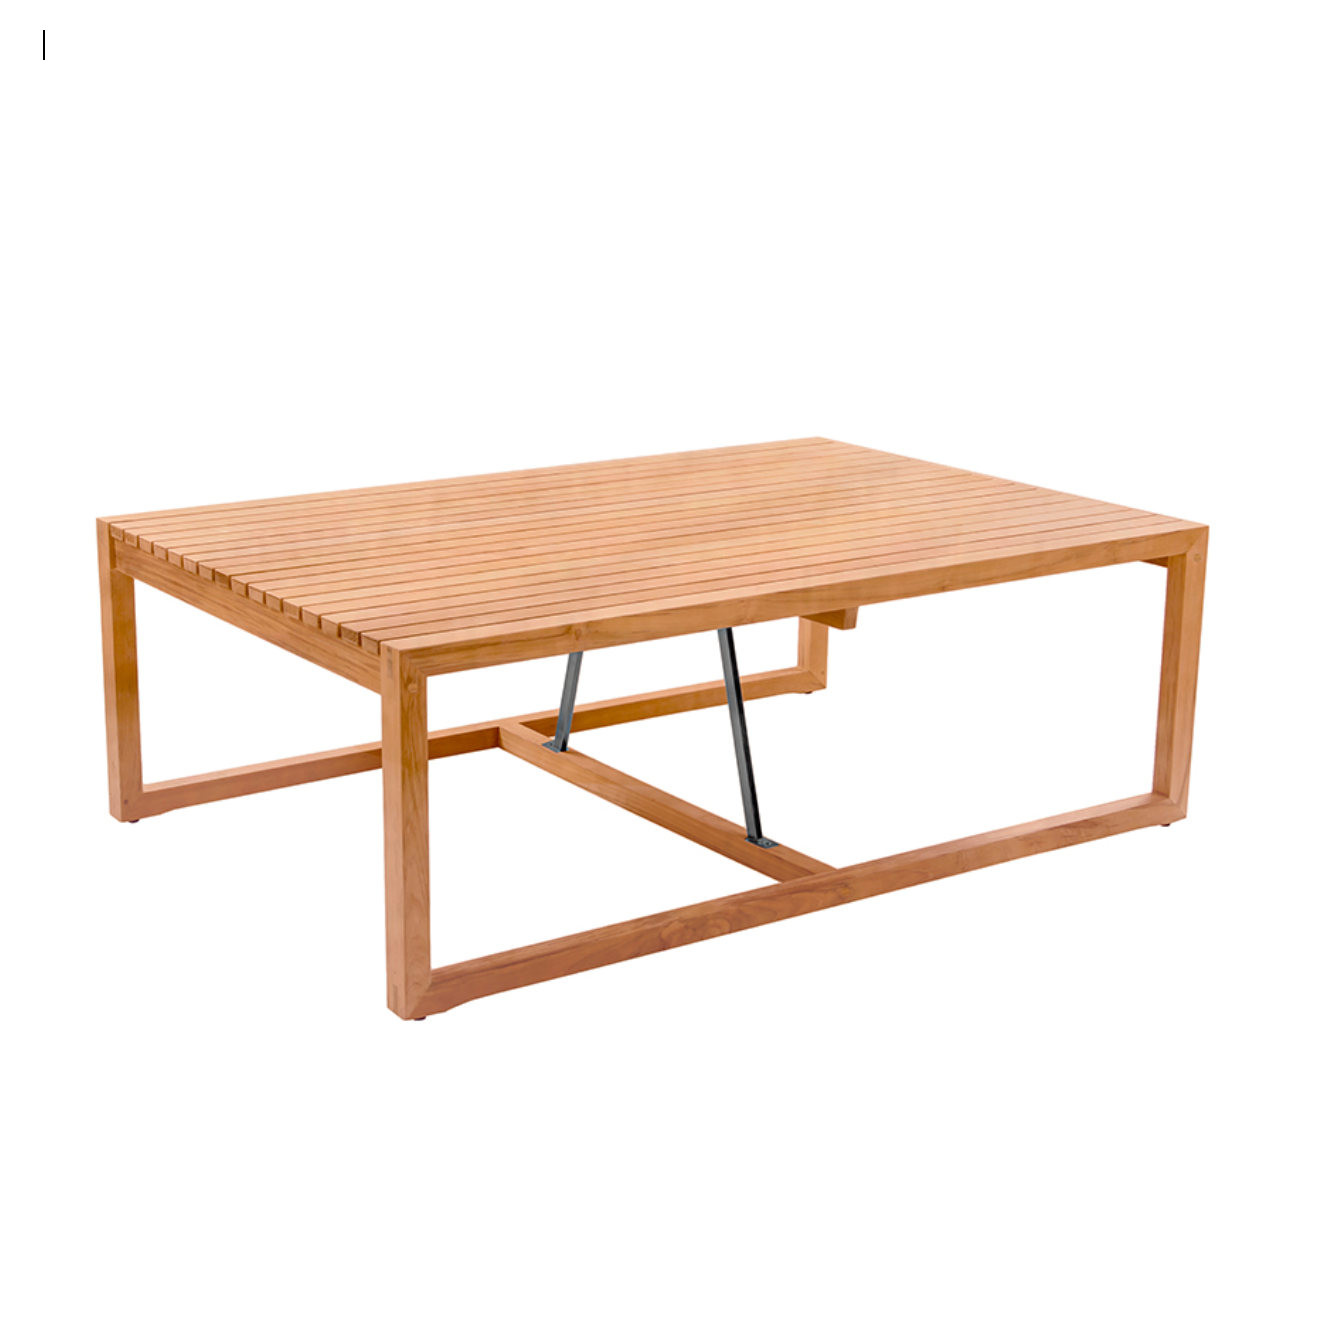 Traditional teak Maxima lounge table 120 cm